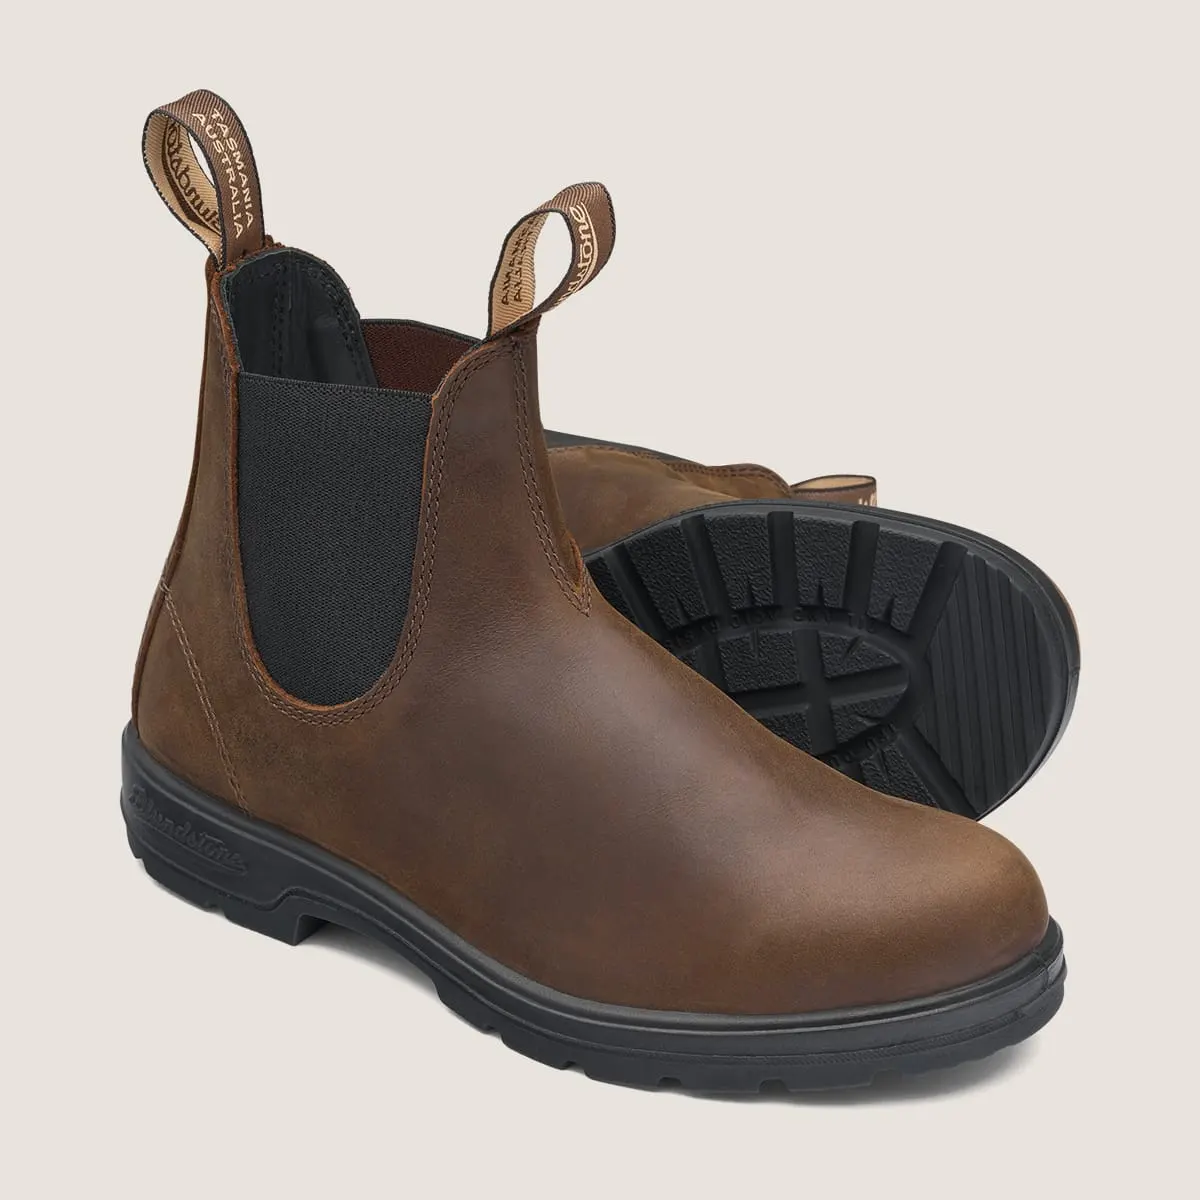 Blundstone 1609 - Comfort antique brown - Chelsea støvle - Hun